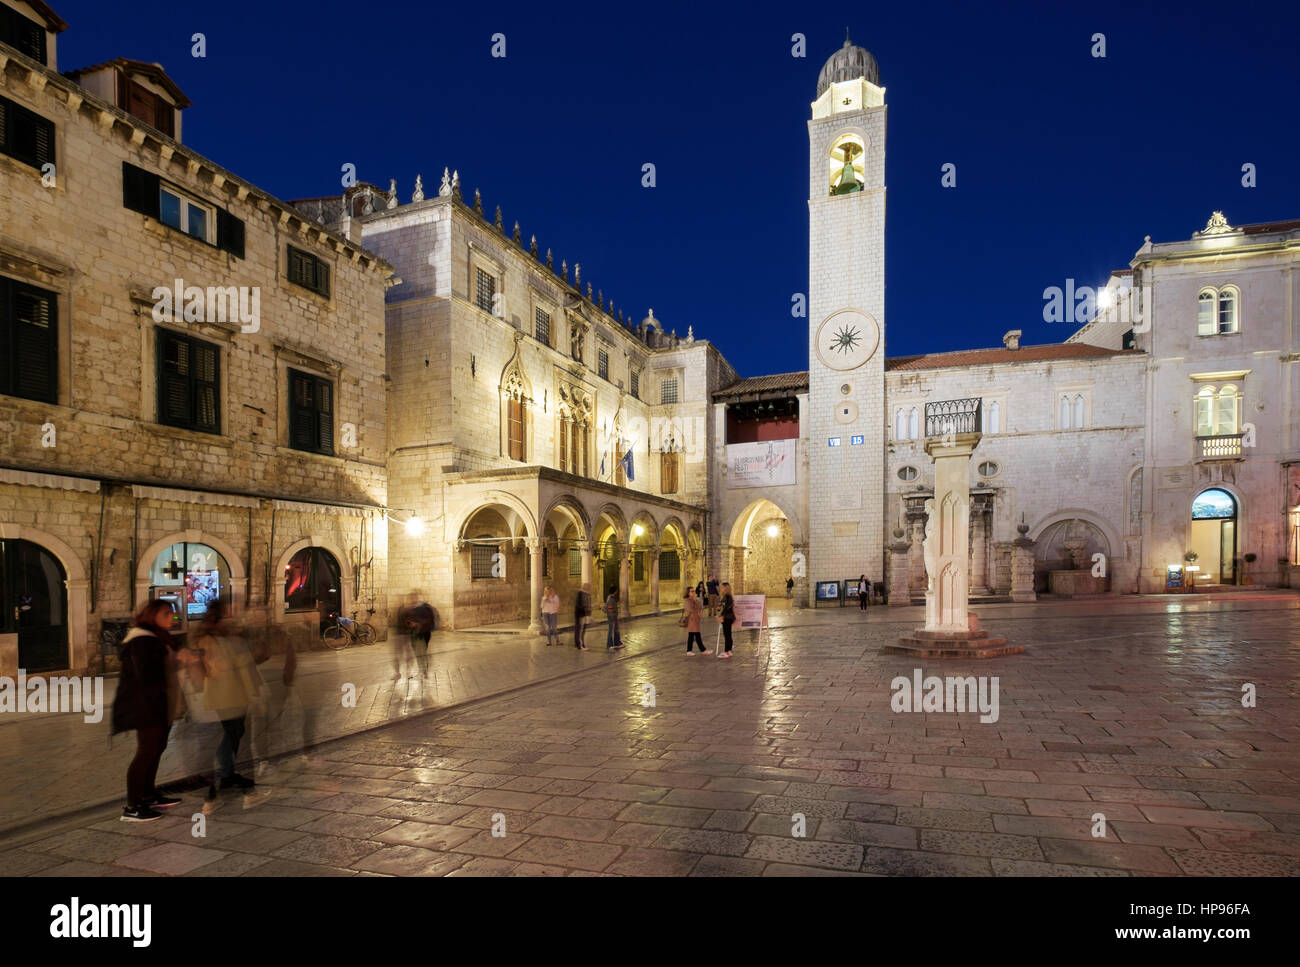 The bell-tower and Orlando's column, Luza Square, Stradun (Placa), early evening, Dubrovnik, Croatia. Stock Photo